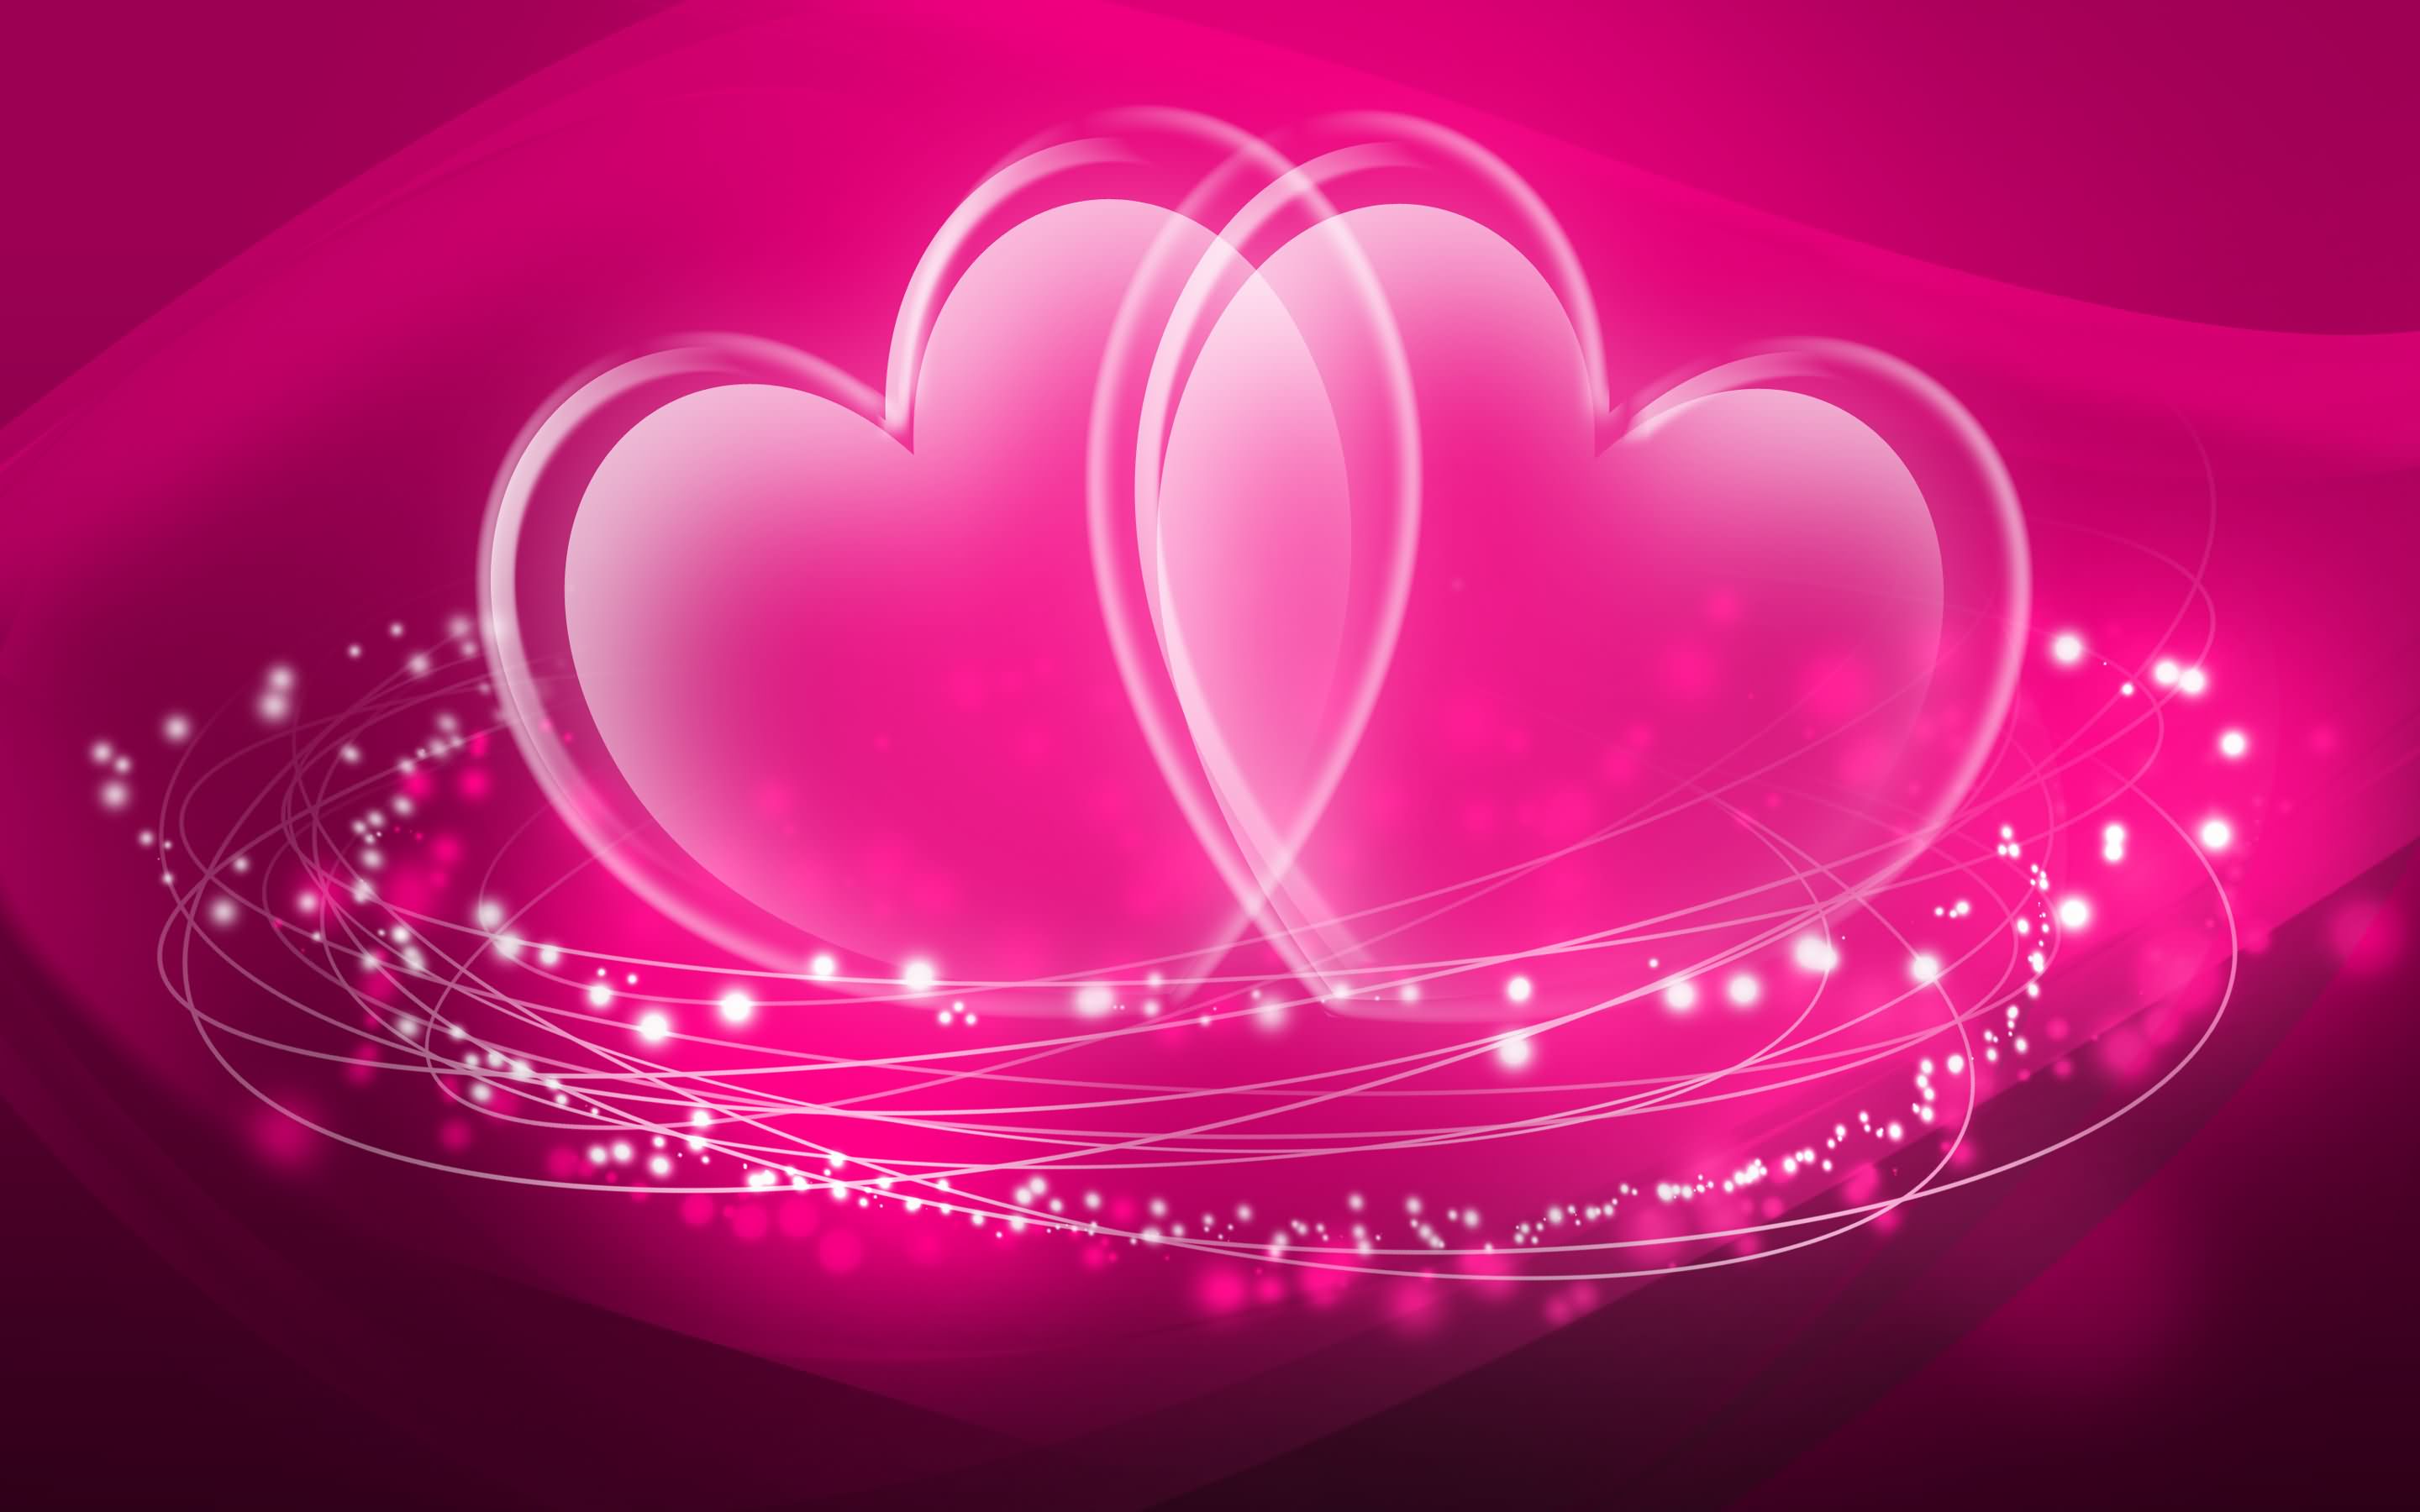 Twin Pink Heart Desktop Background Image Imagefully